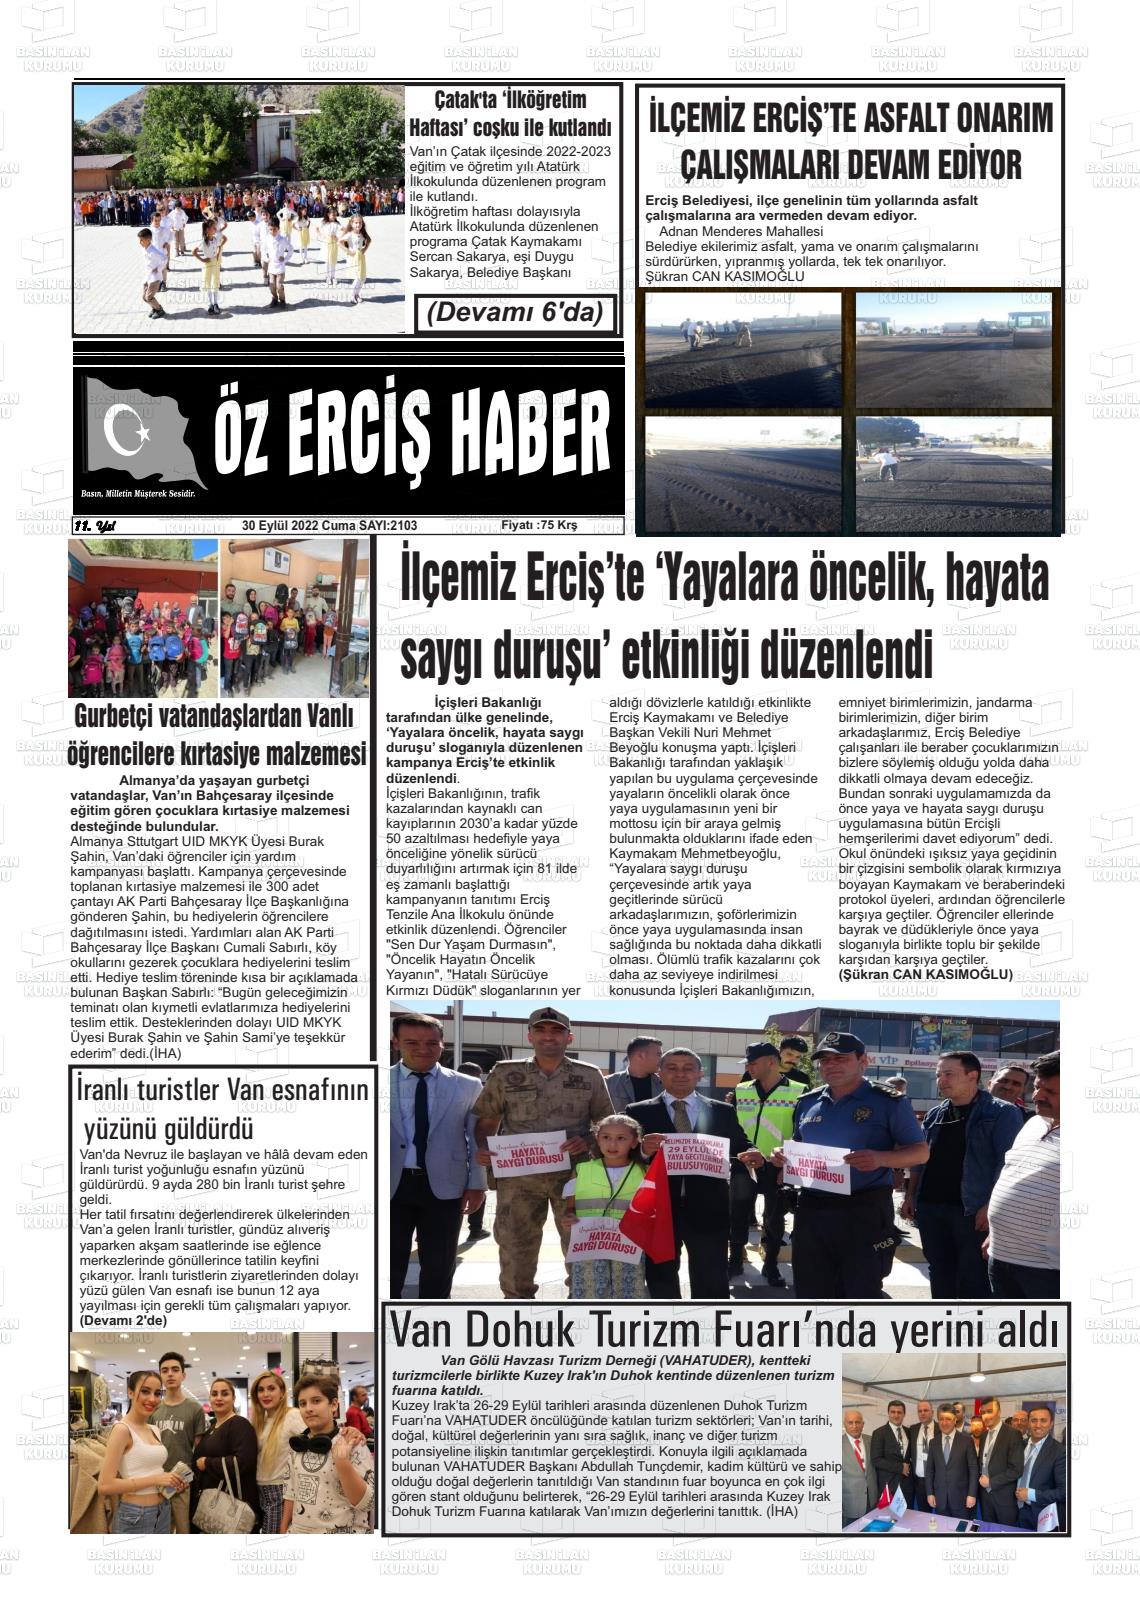 30 Eylül 2022 Öz Erciş Haber Gazete Manşeti